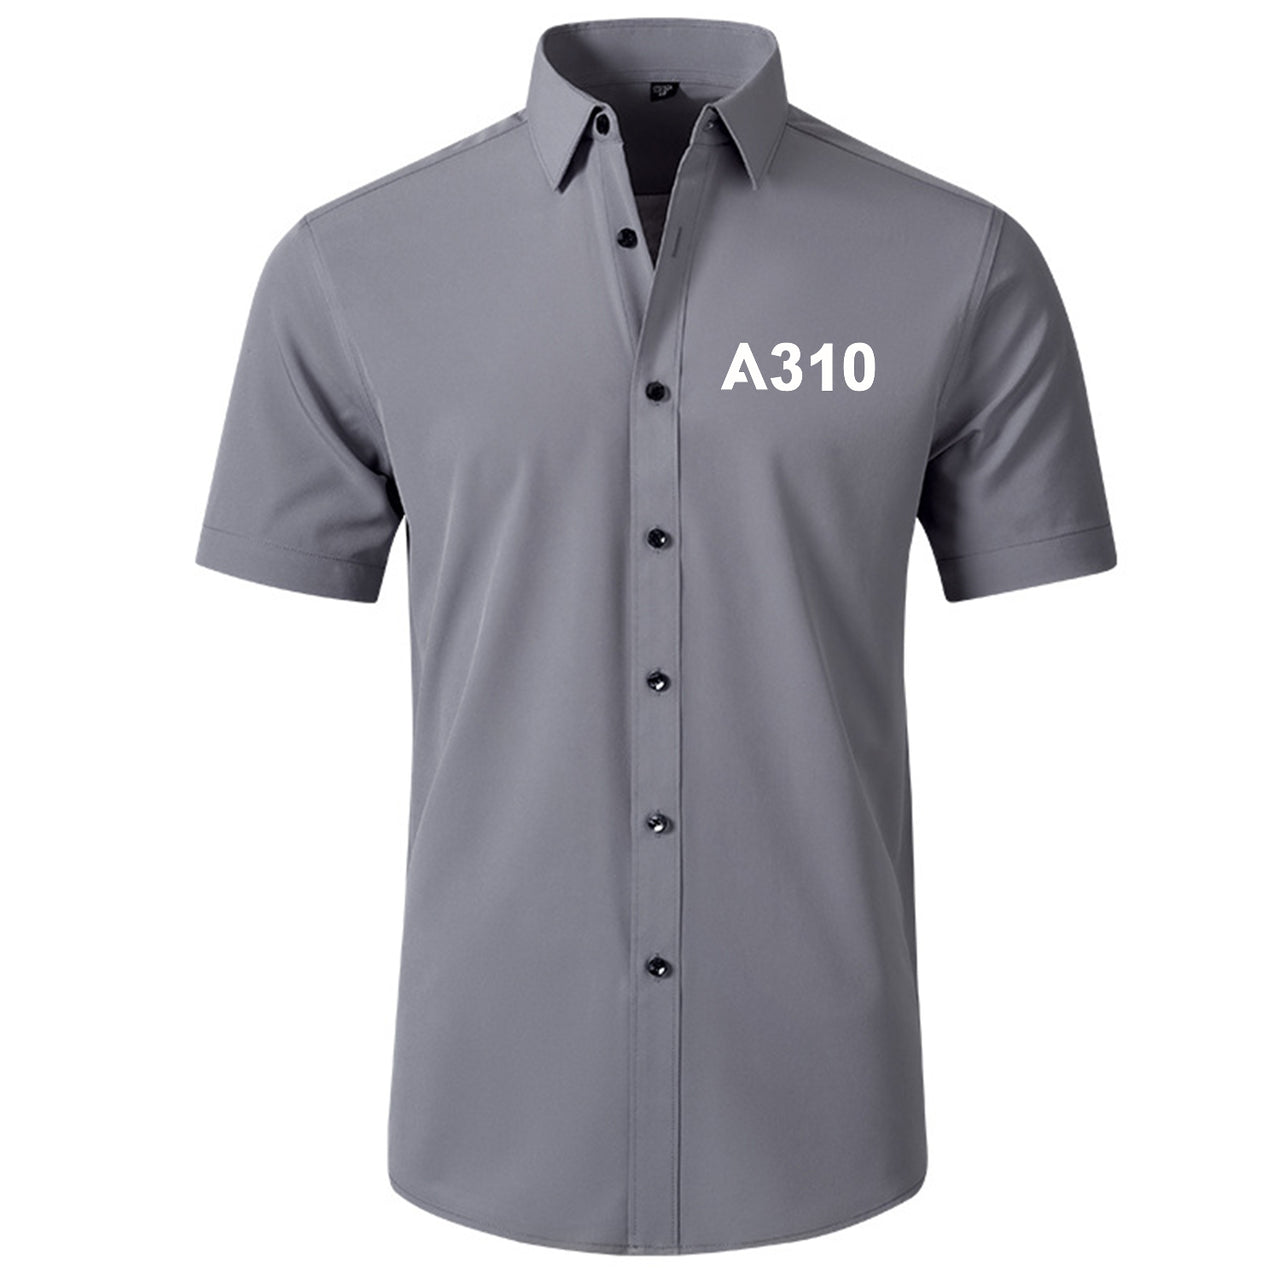 A310 Flat Text Designed Short Sleeve Shirts